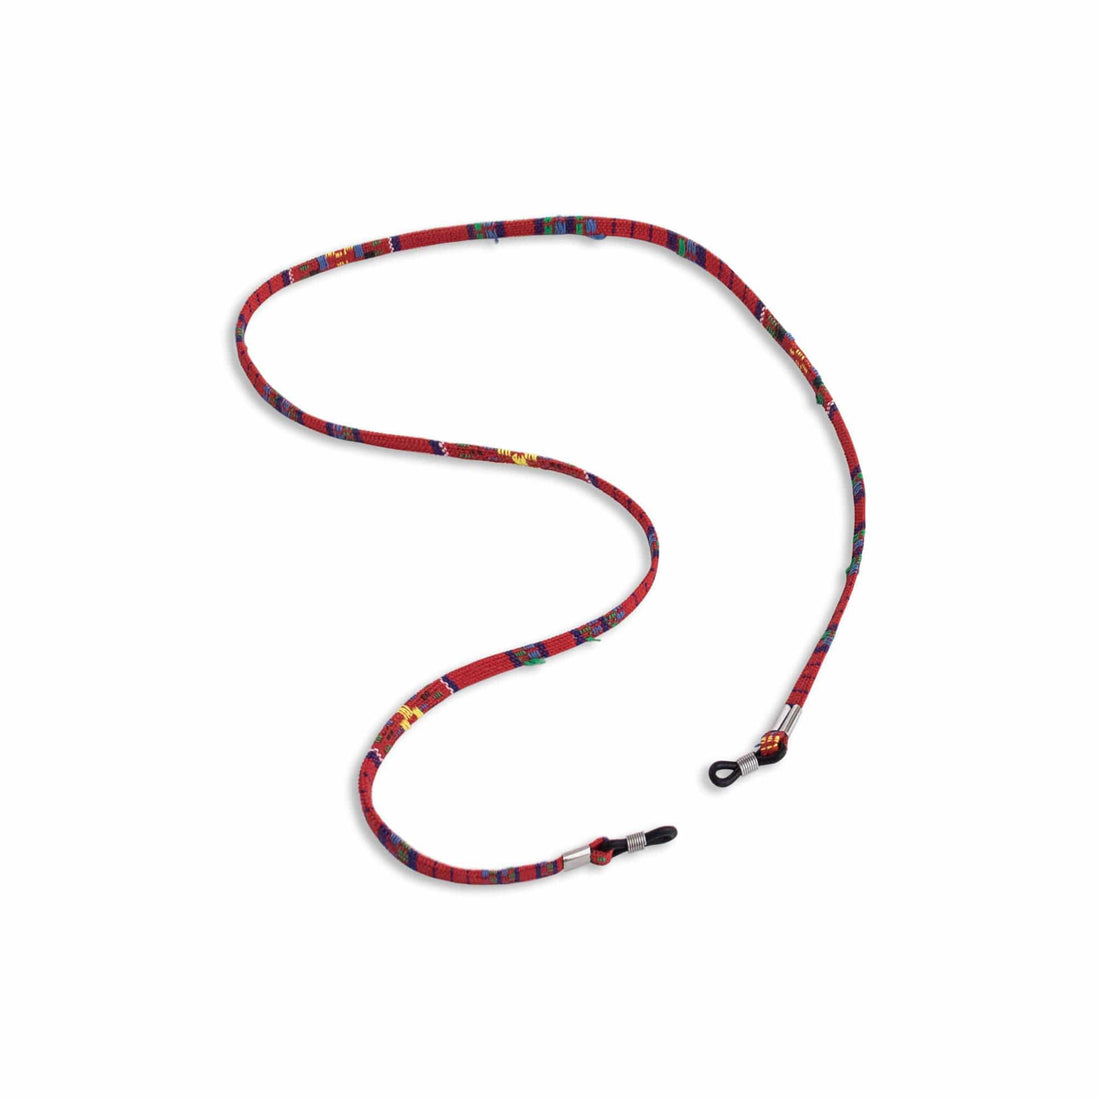 Eyewear Chain - Red Rope Glasses Lanyard